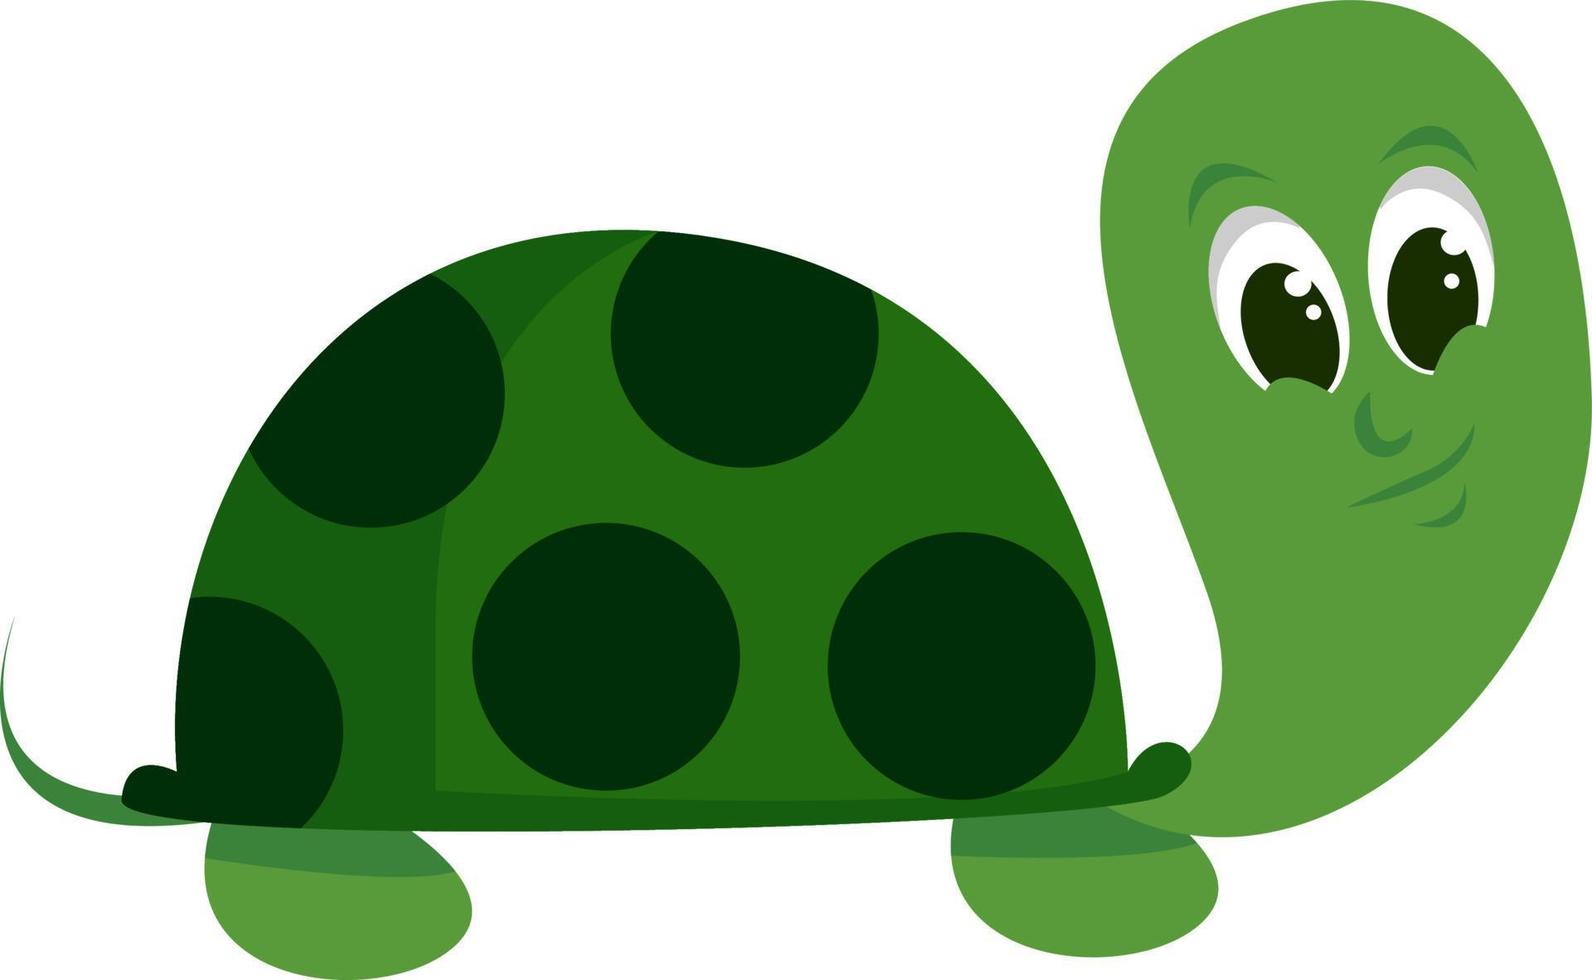 tartaruga bonito verde, ilustração, vetor em fundo branco.